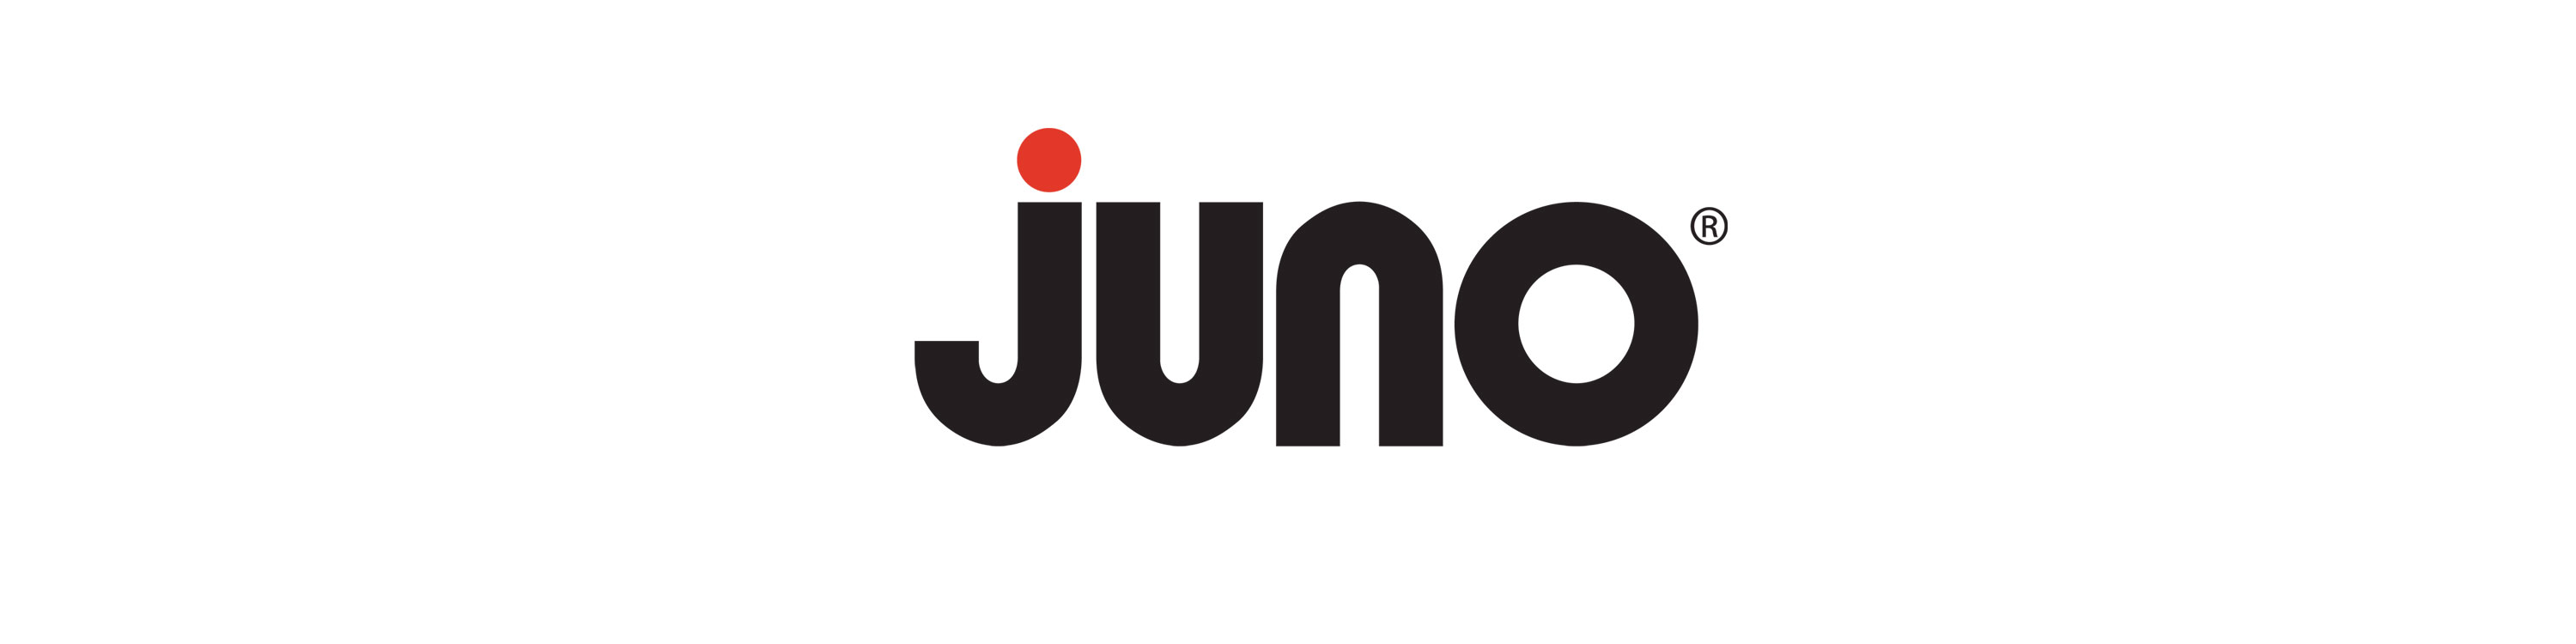 juno-logo-image